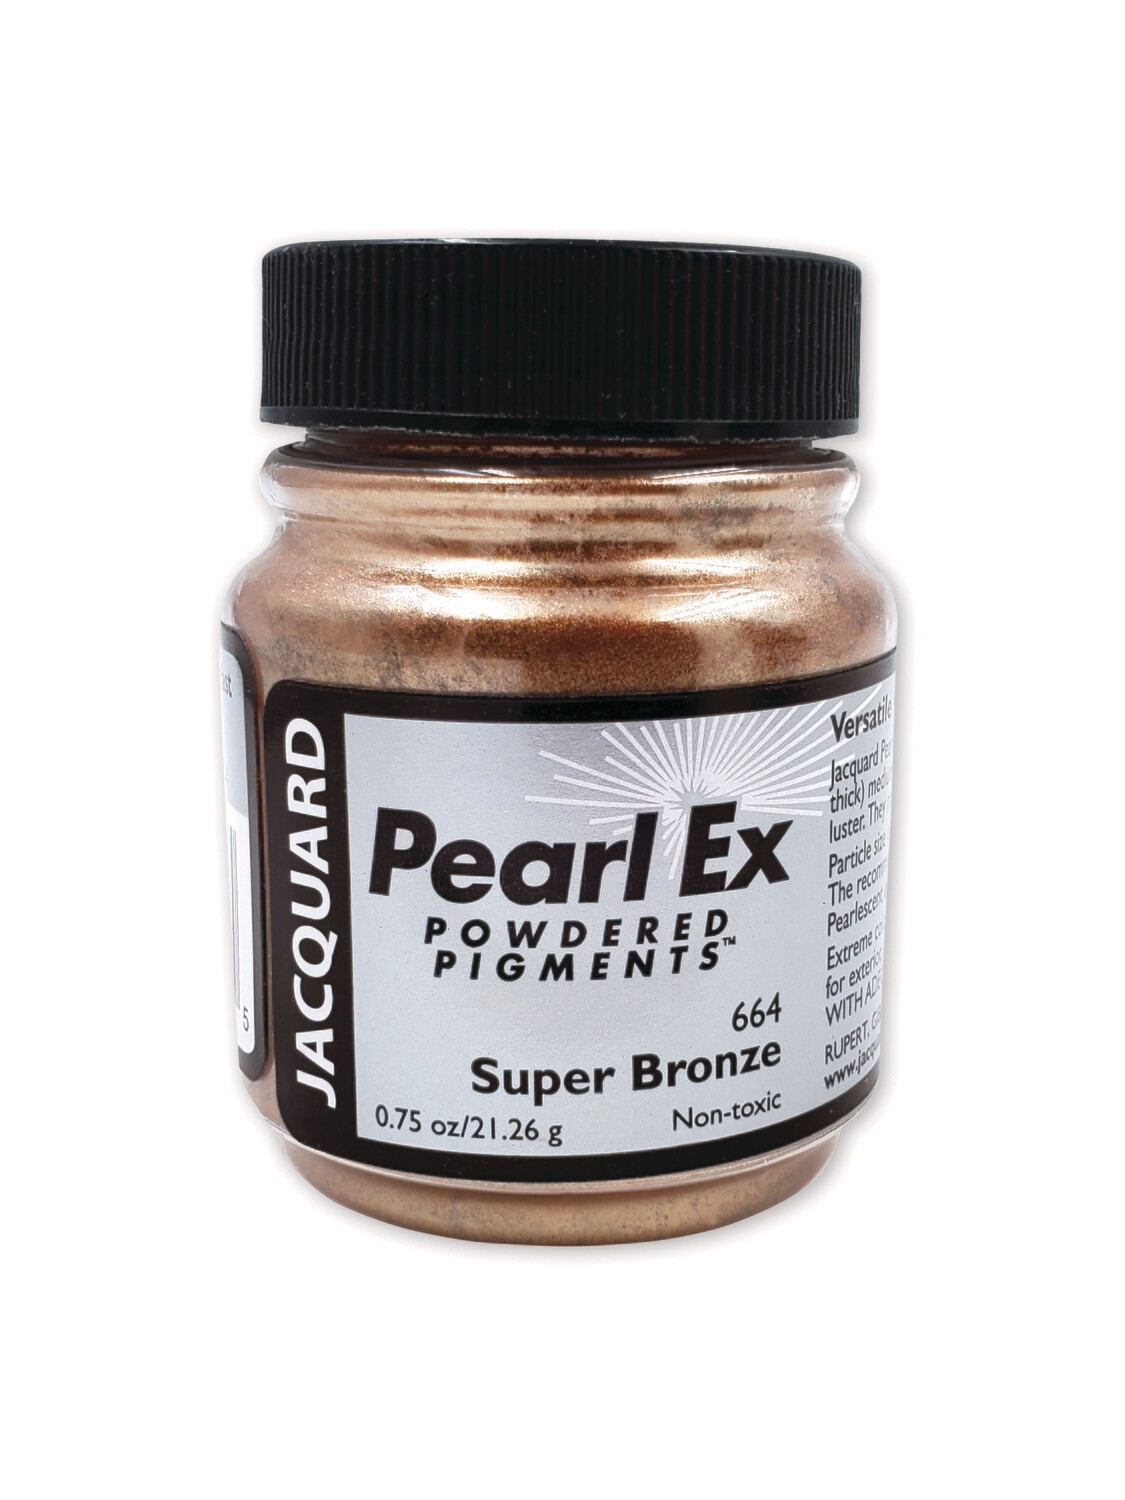 Pearl Ex Powdered Pigments-Super Bronze